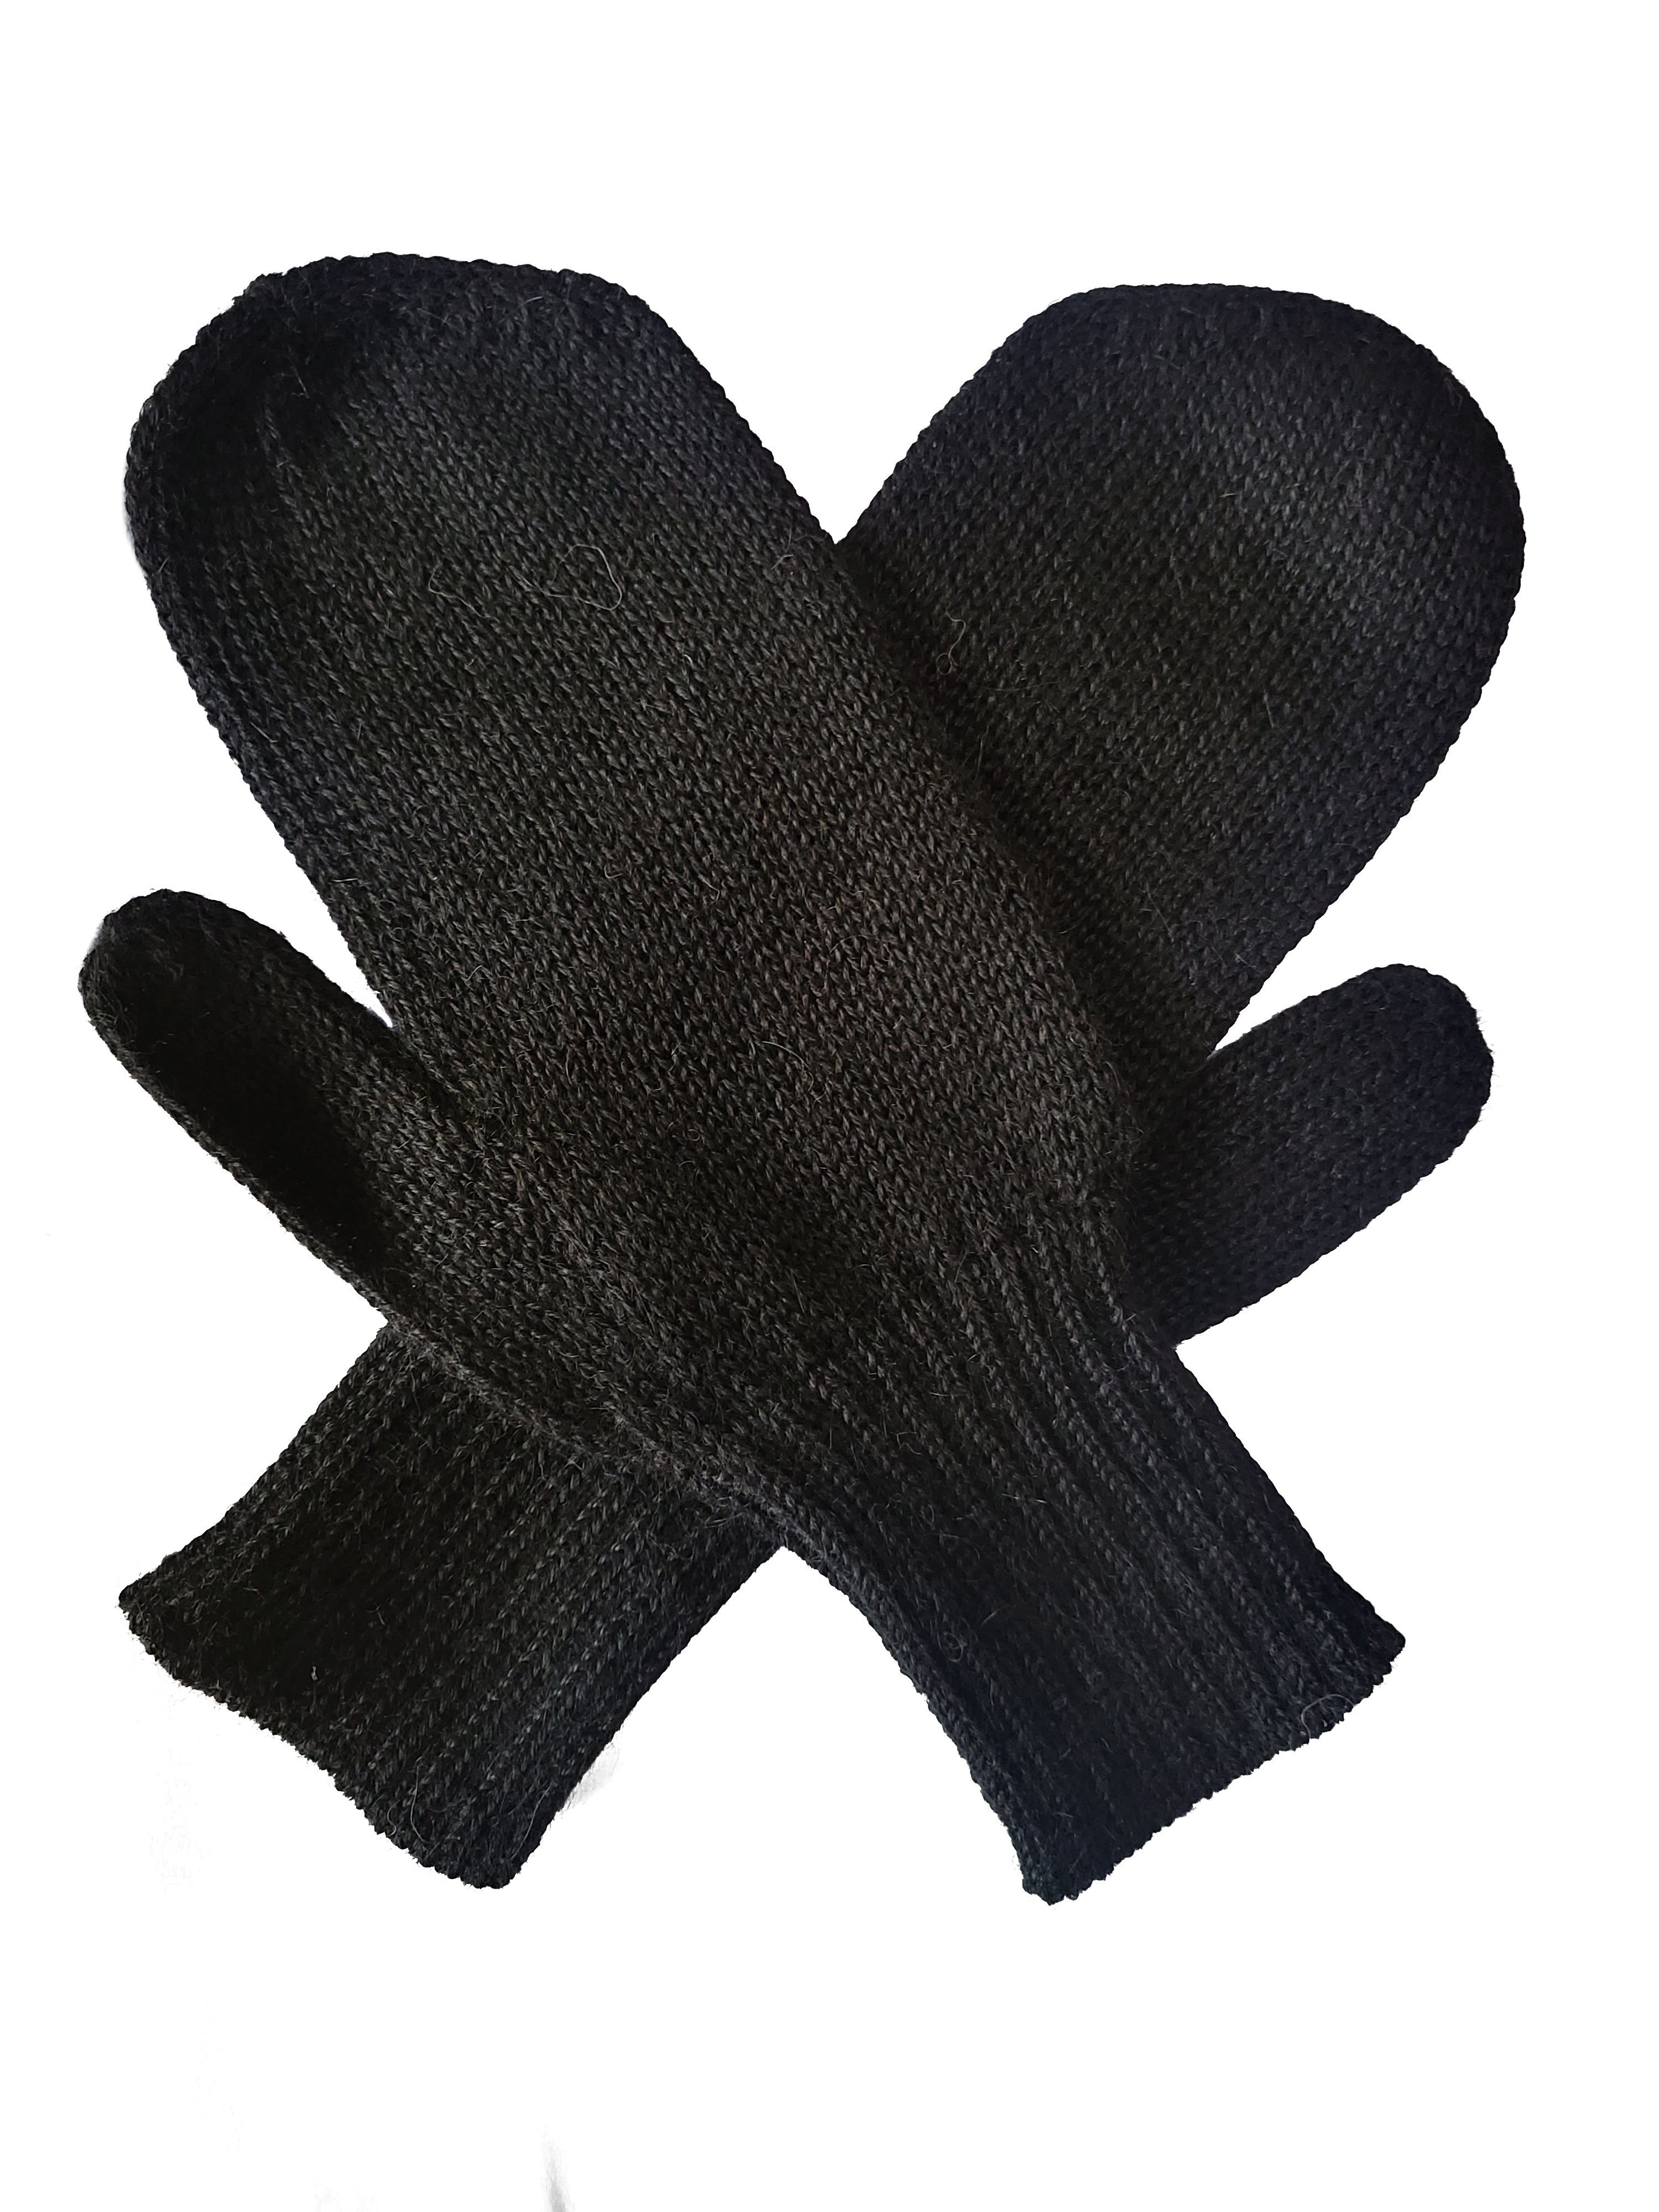 Alpaka Gear Alpakawolle Pugnoguanti schwarz Handschuhe Herren aus 100% Posh Damen Fäustlinge